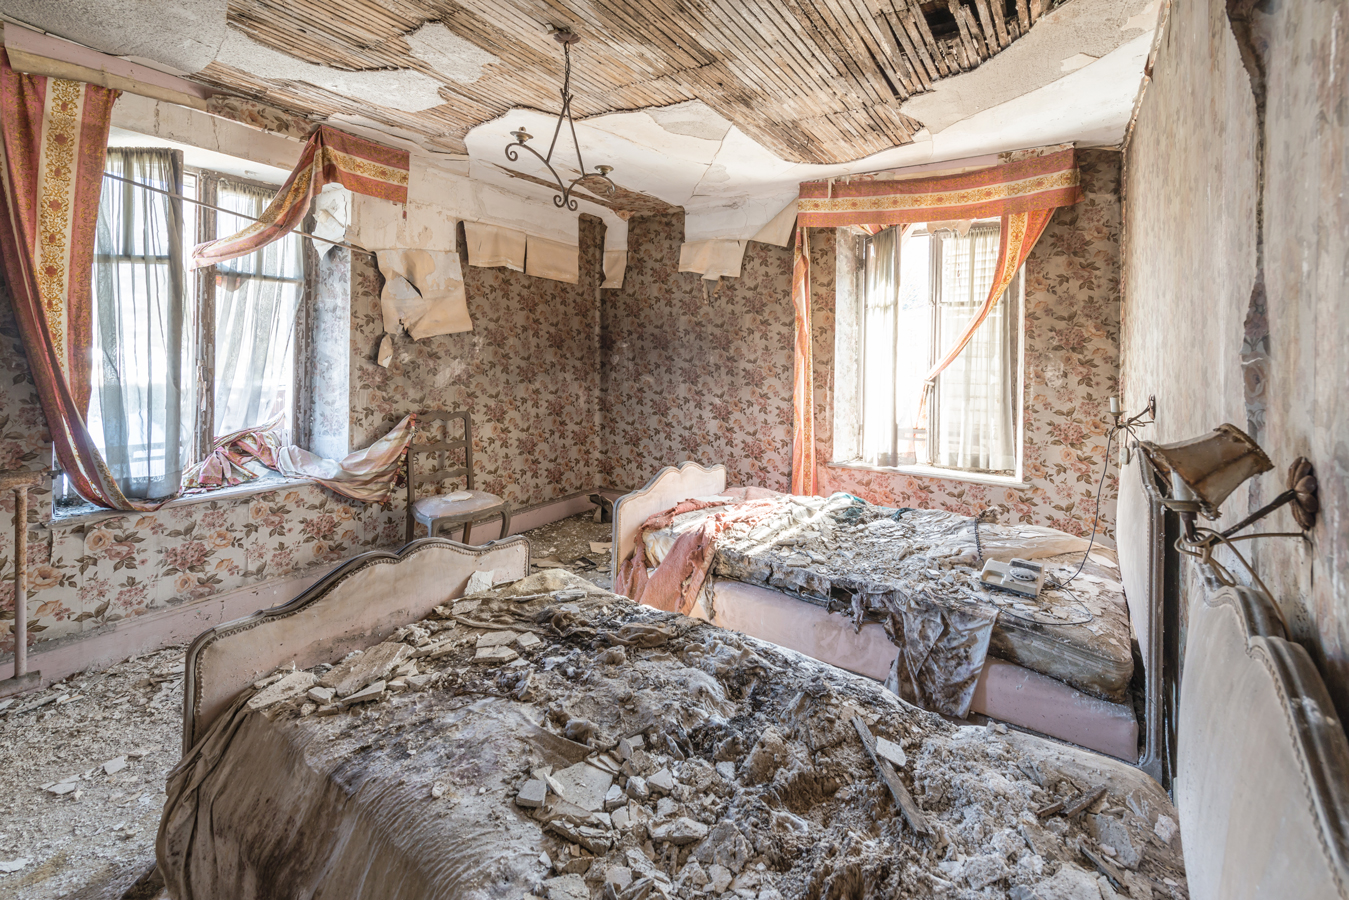 Photographer: Romain Veillon & Abandoned Spaces Around the World